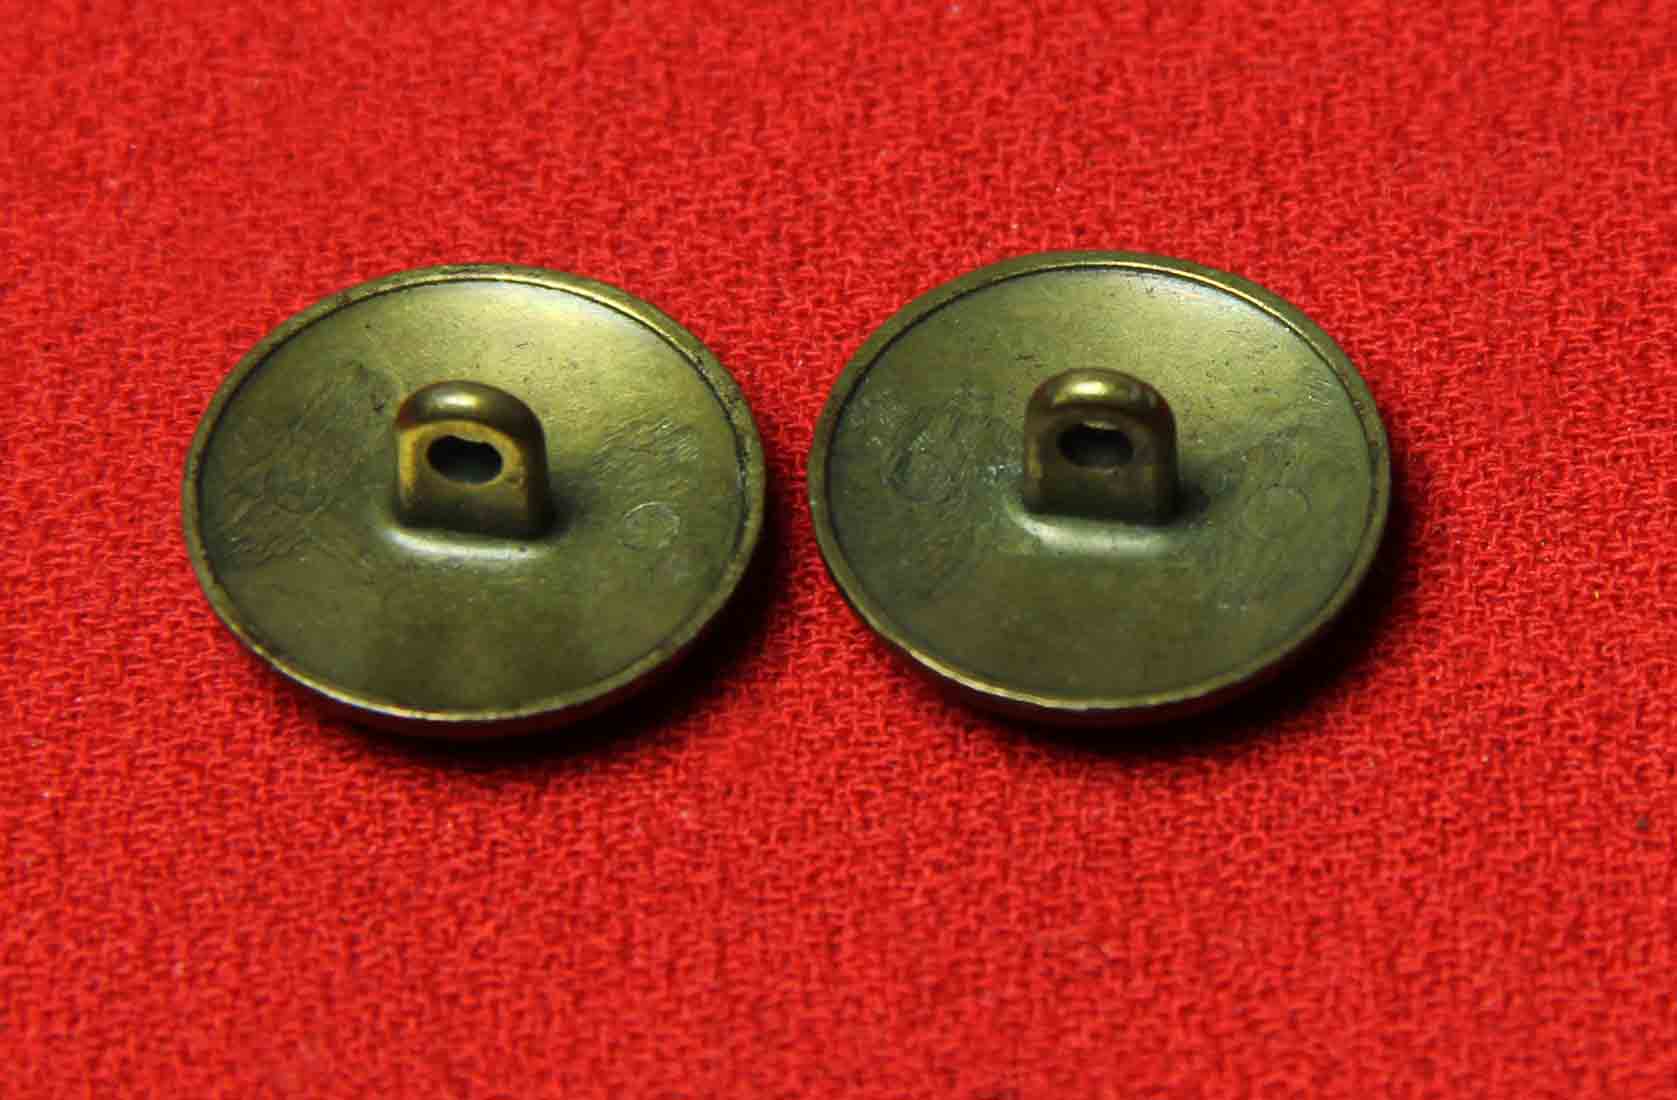 Two Vintage E.R.M. - K.M.S. Royal Military Academy Blazer Jacket Buttons Antique Gold Brown Metal Men's